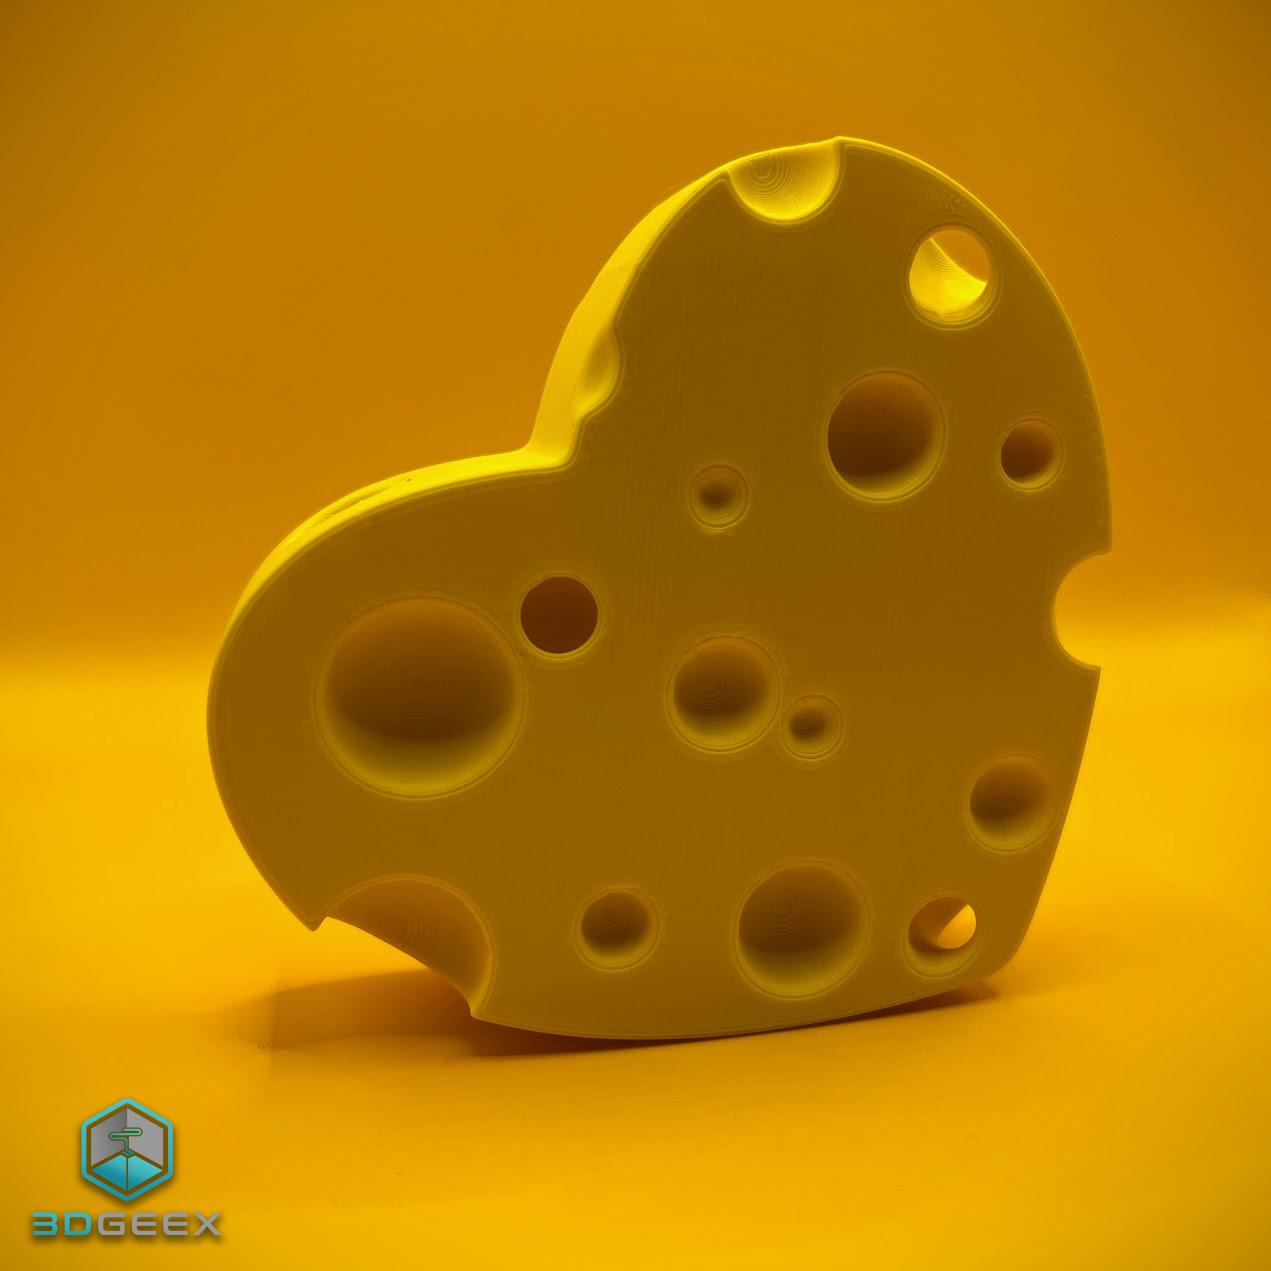 Cheesy Valentine's Gift 3d model